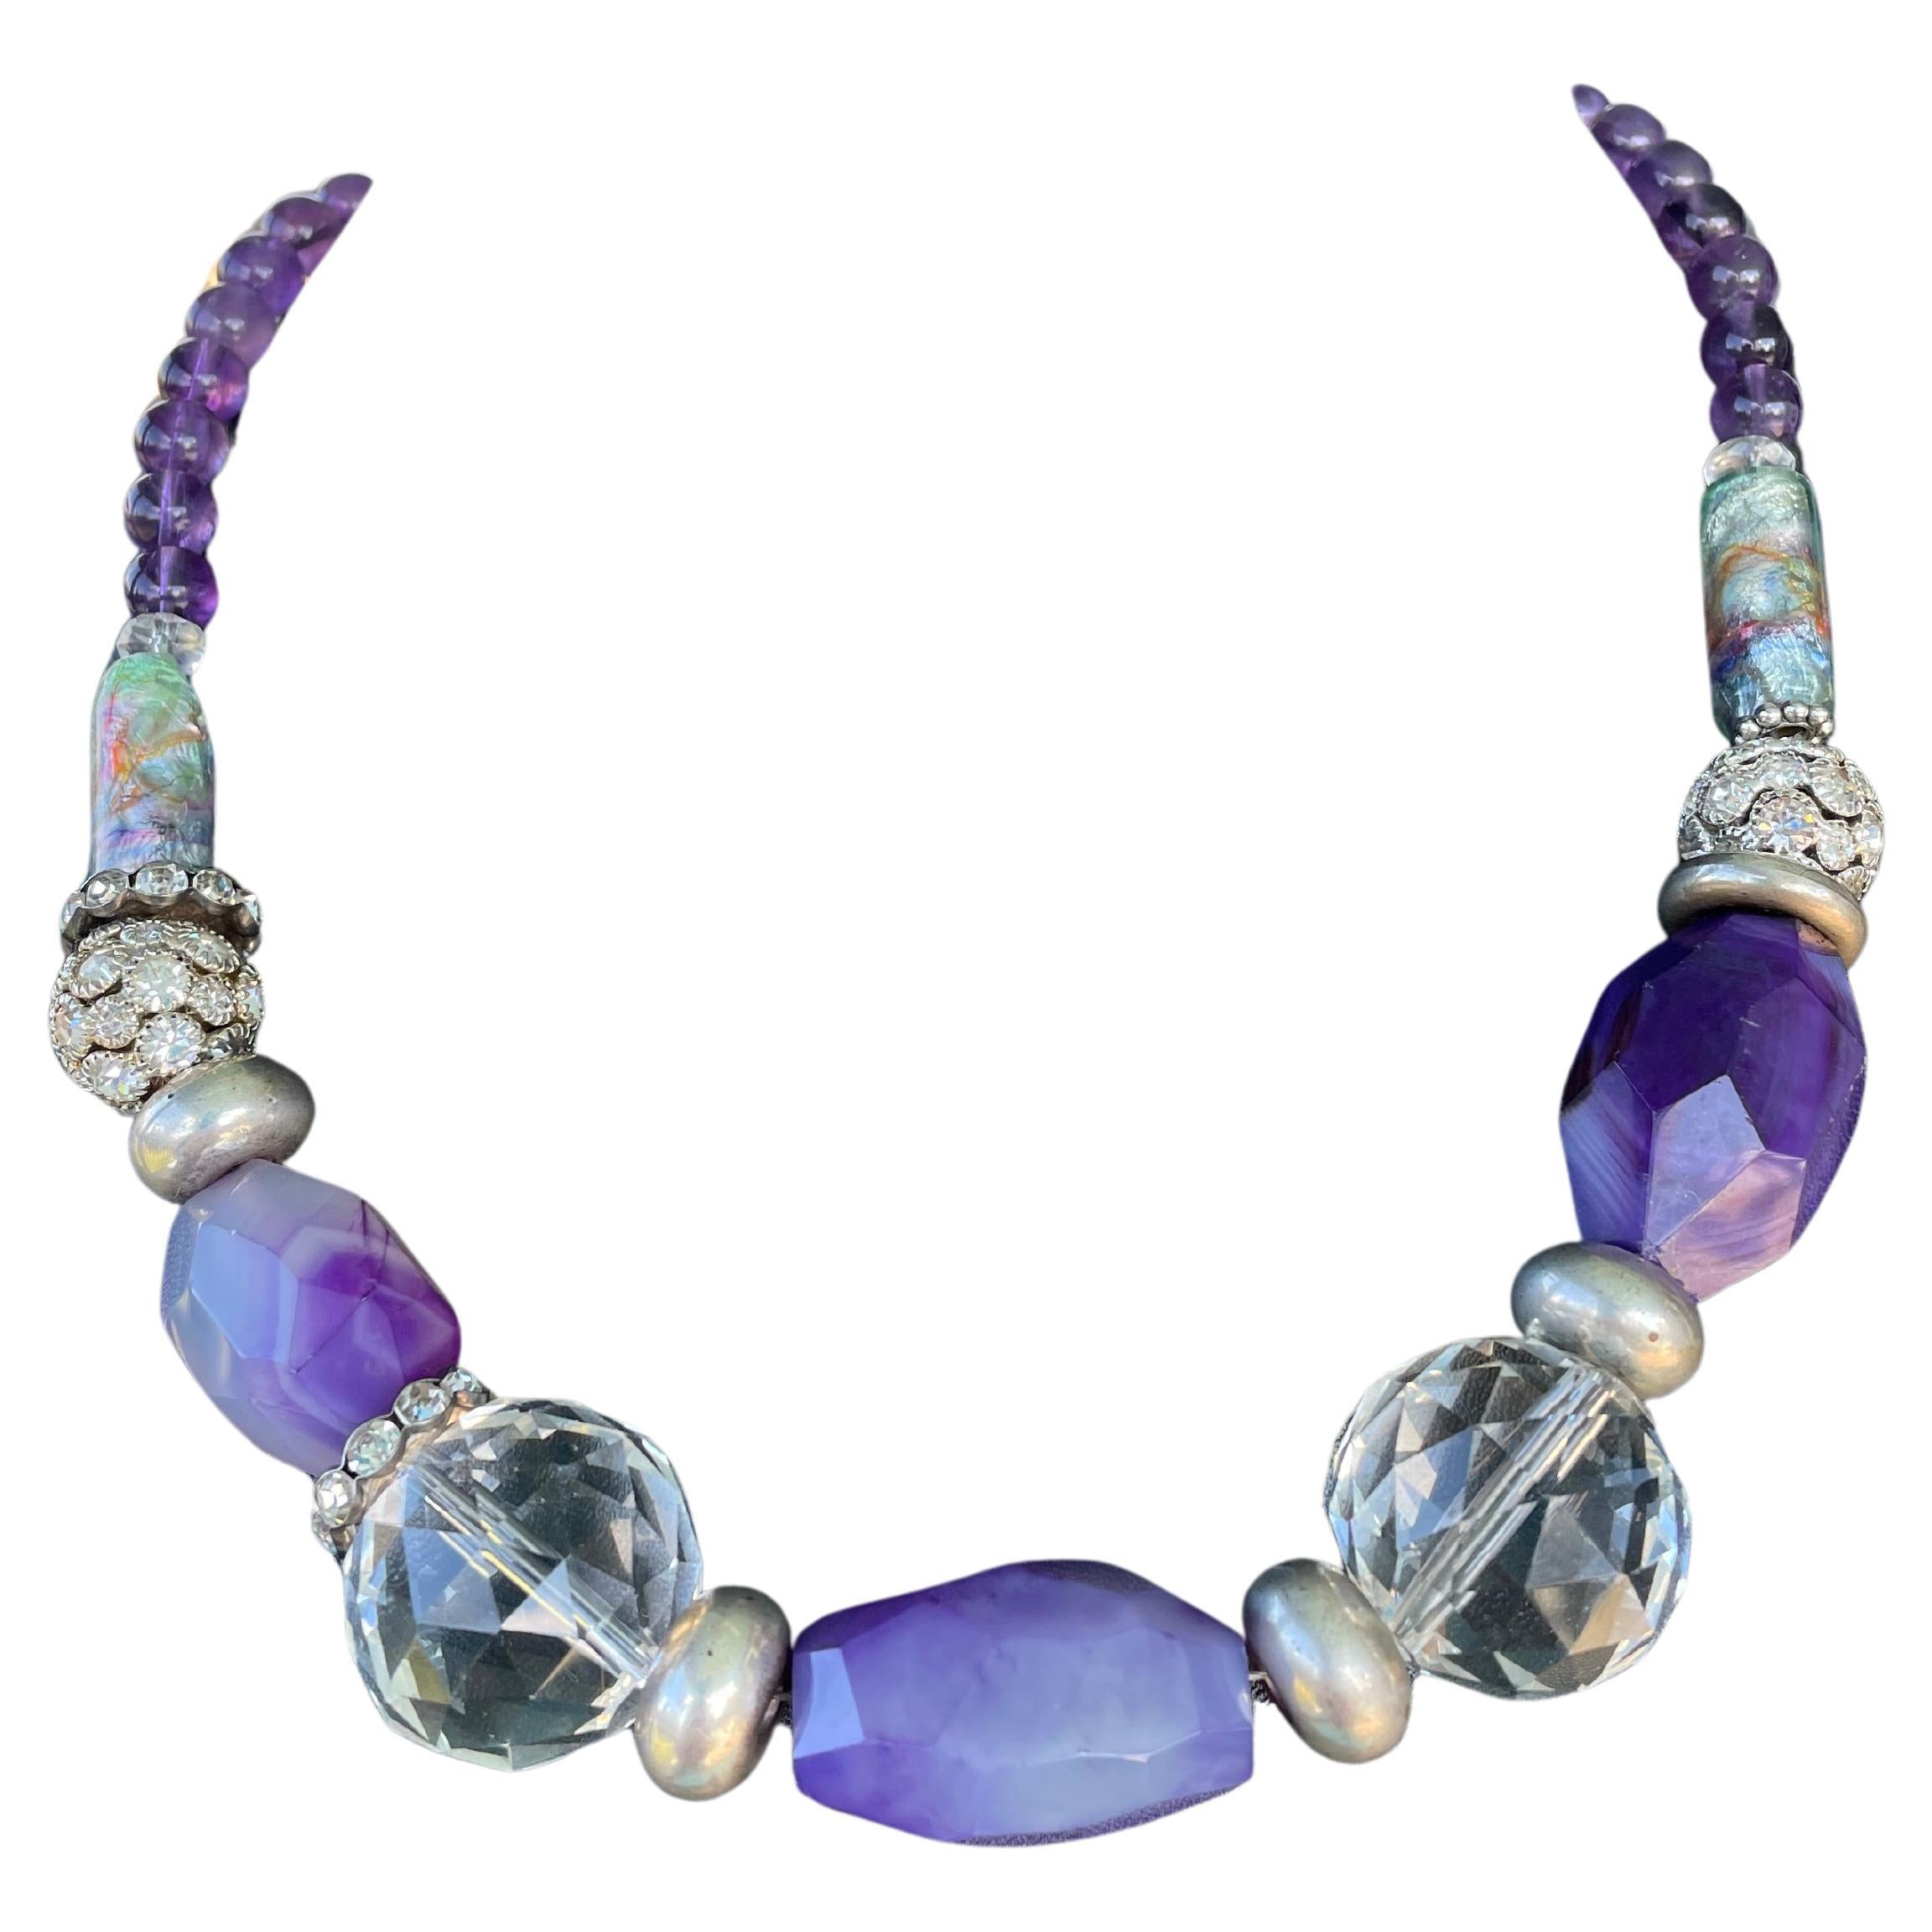 LB bietet Achat Amethyst Bergkristall Sterlingsilber OOAK einzigartige Halskette im Angebot